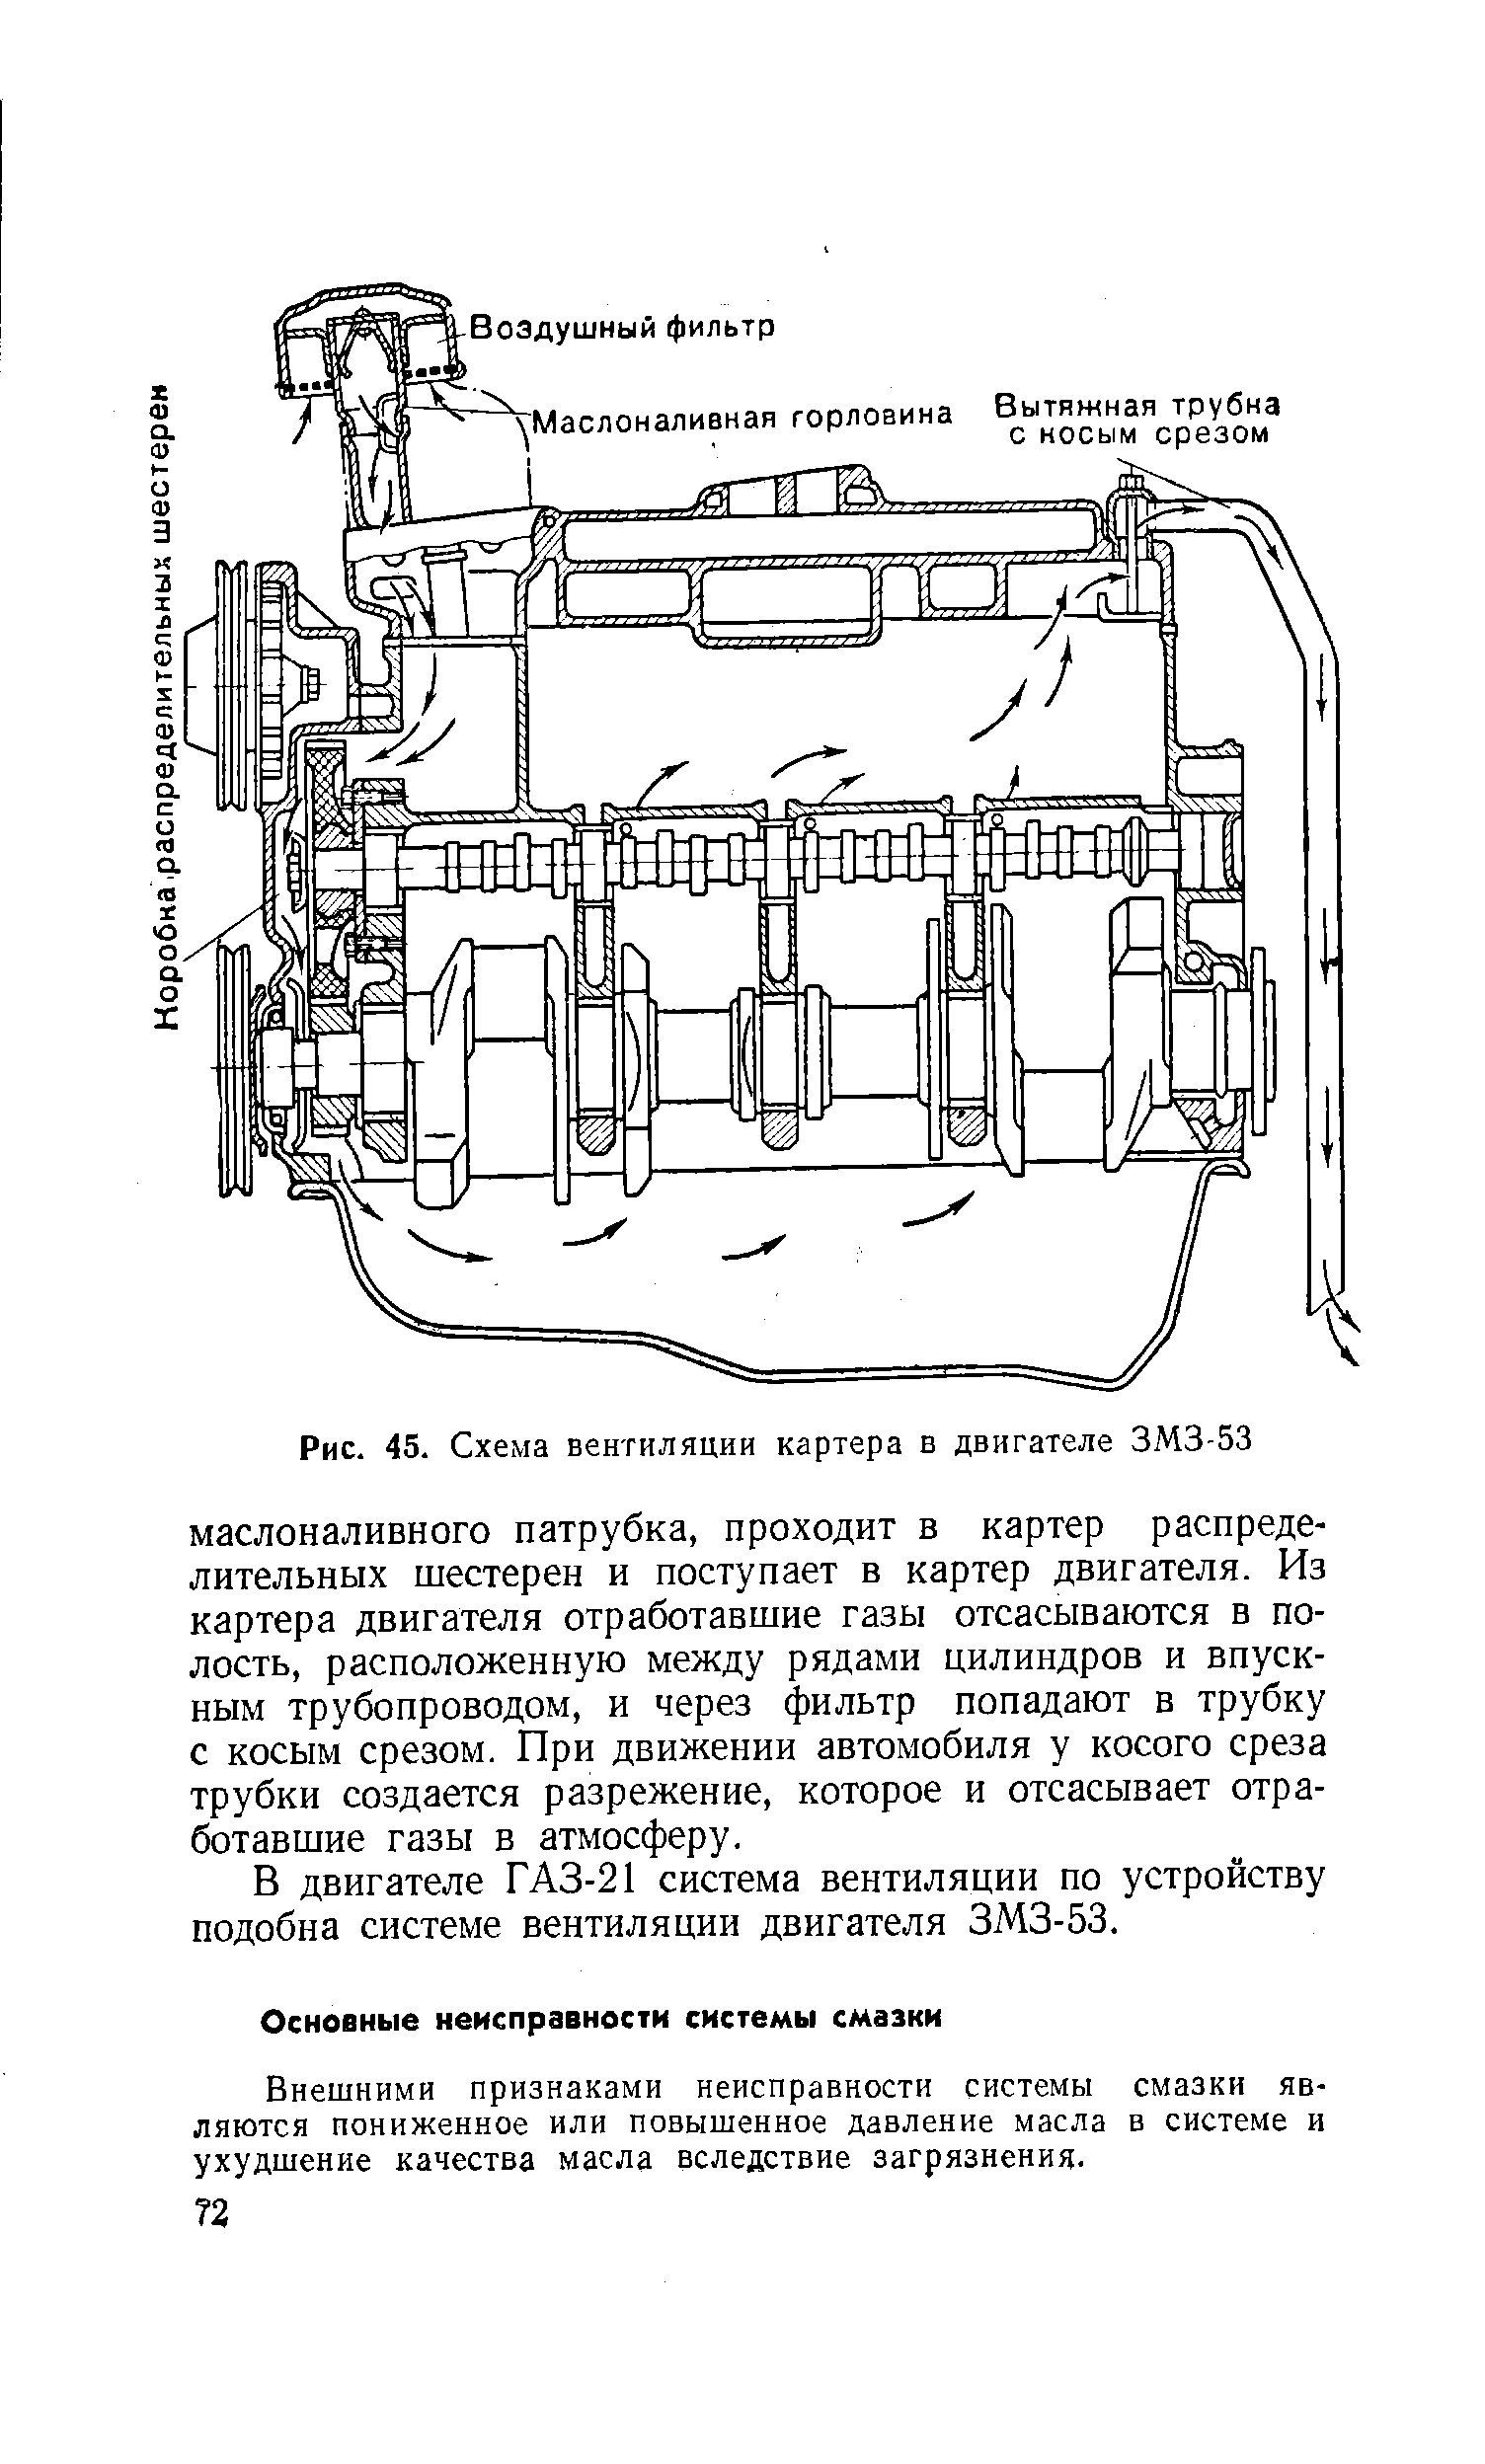 Рис. 45. Схема вентиляции картера в двигателе ЗМЗ-53
